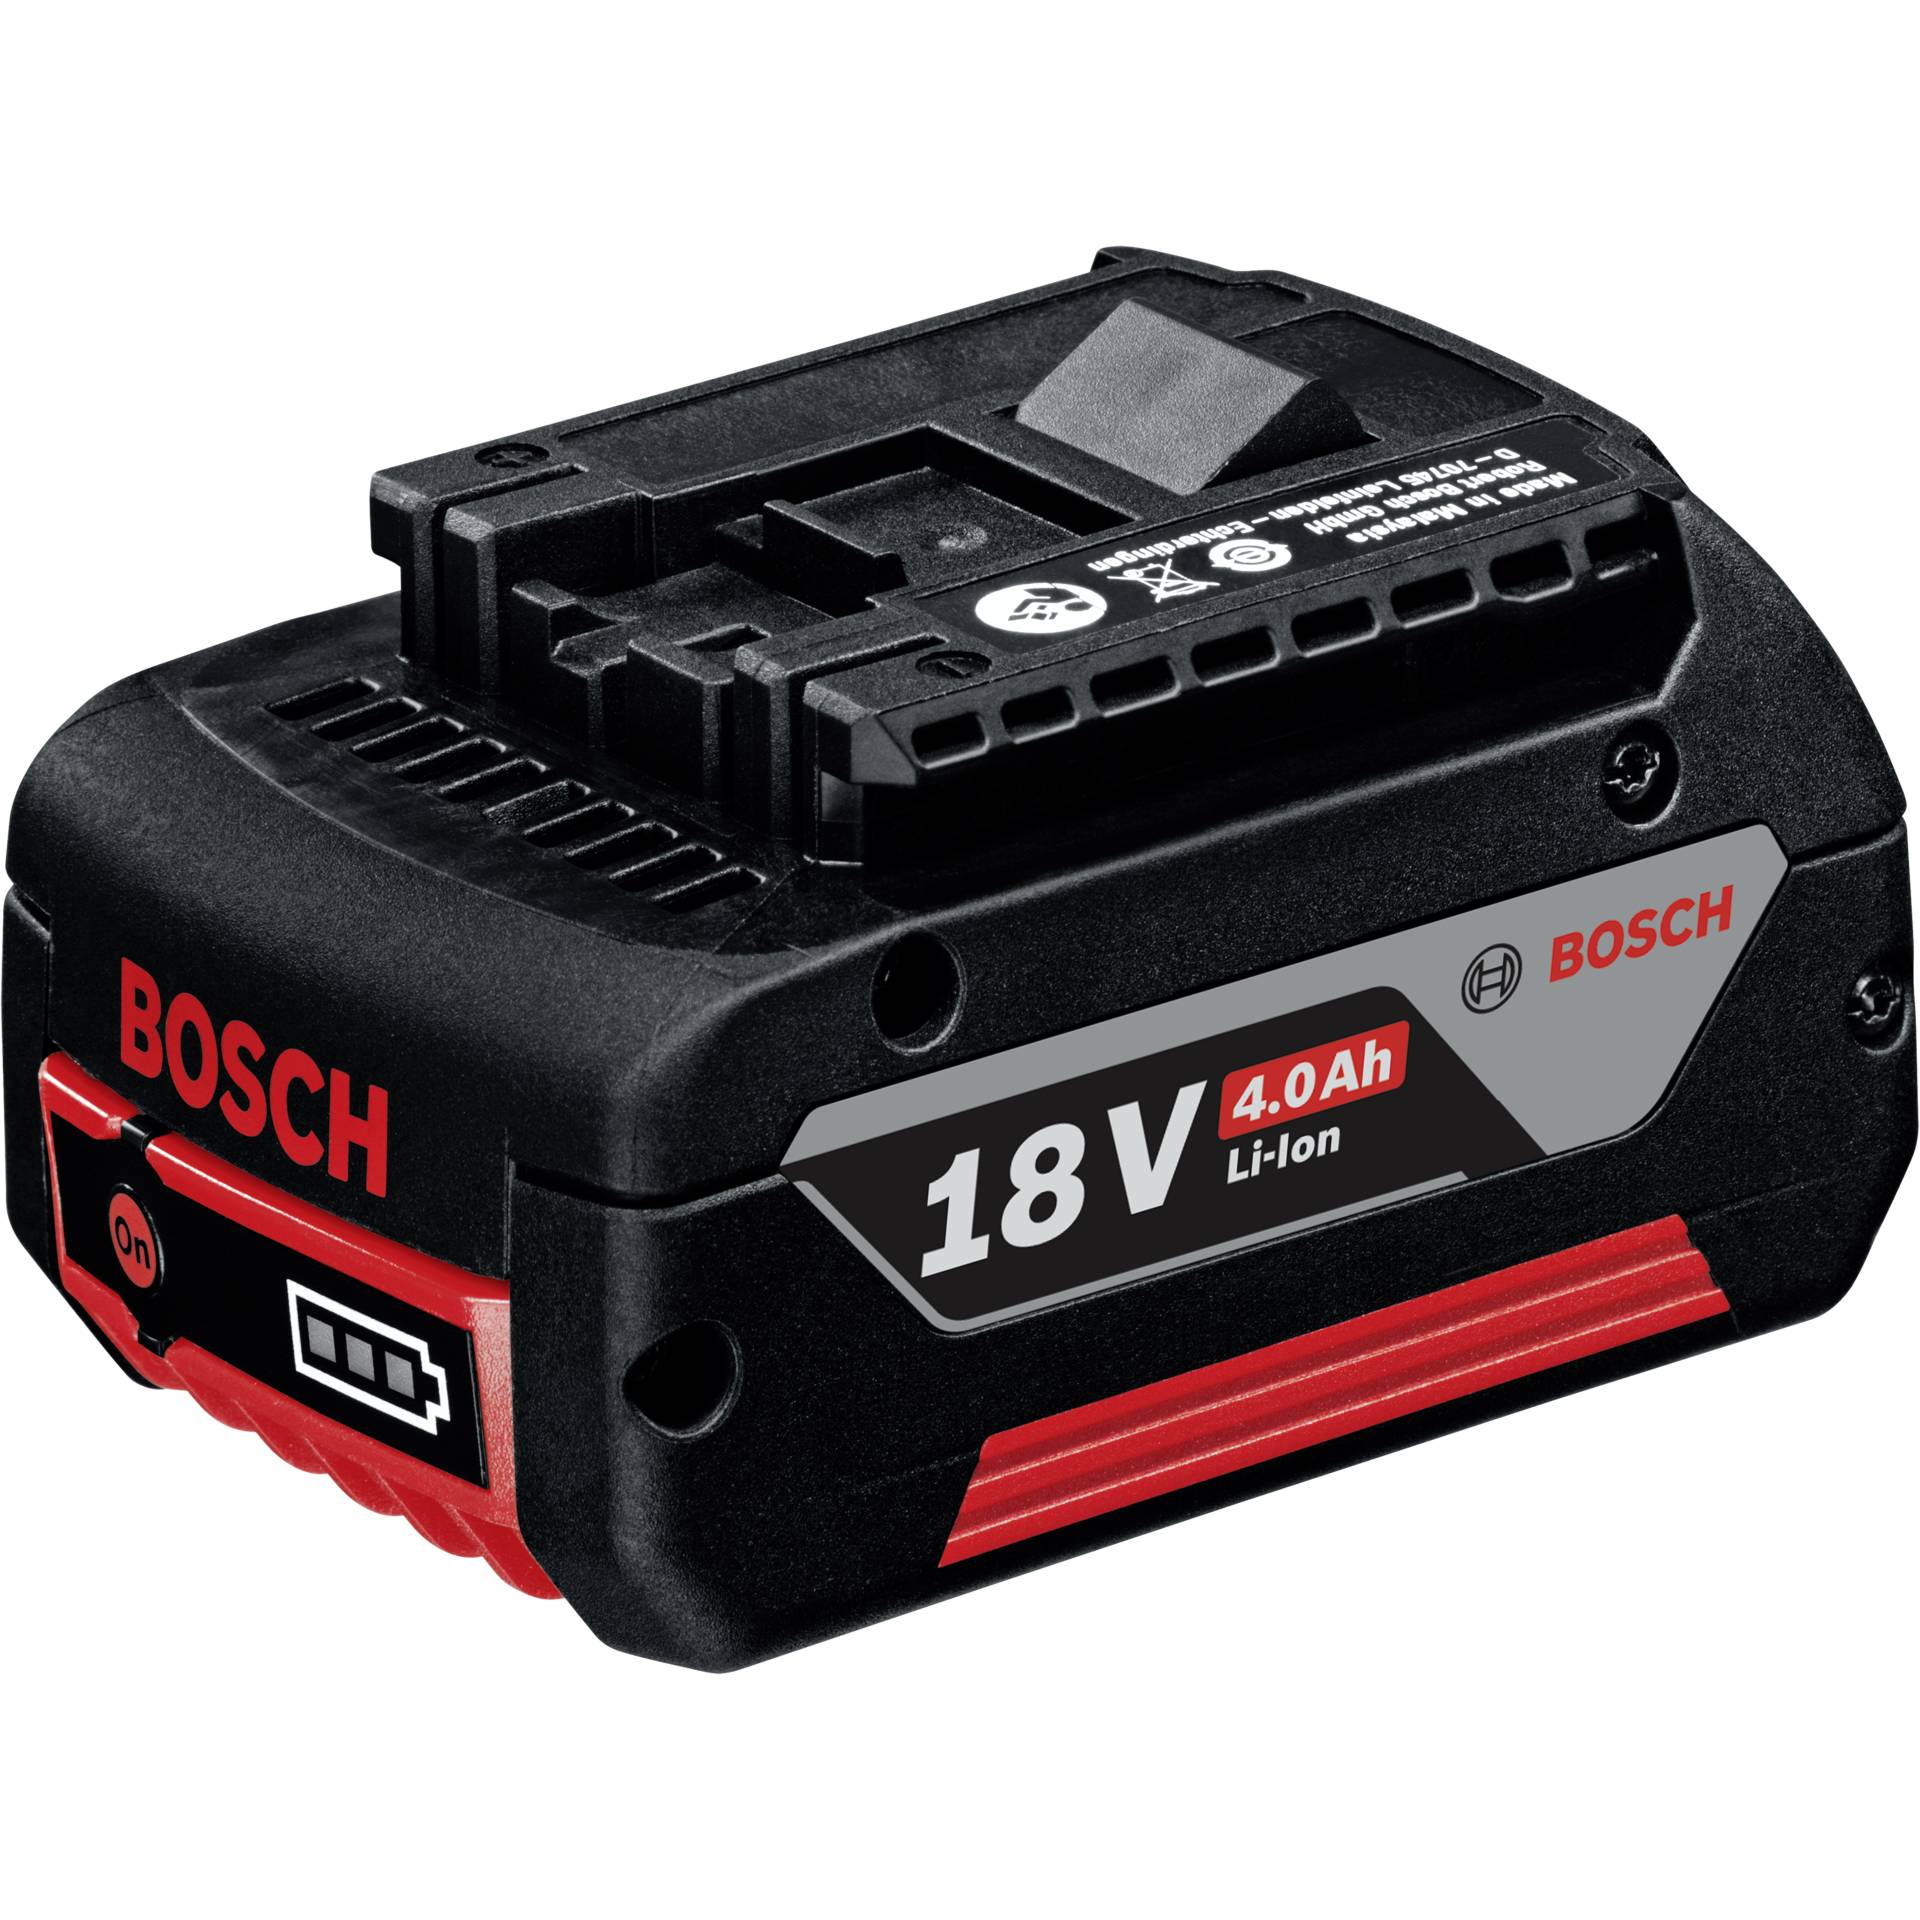 Bosch GBA 18V 4.0Ah batt. - Bosch - Autoscatto Store